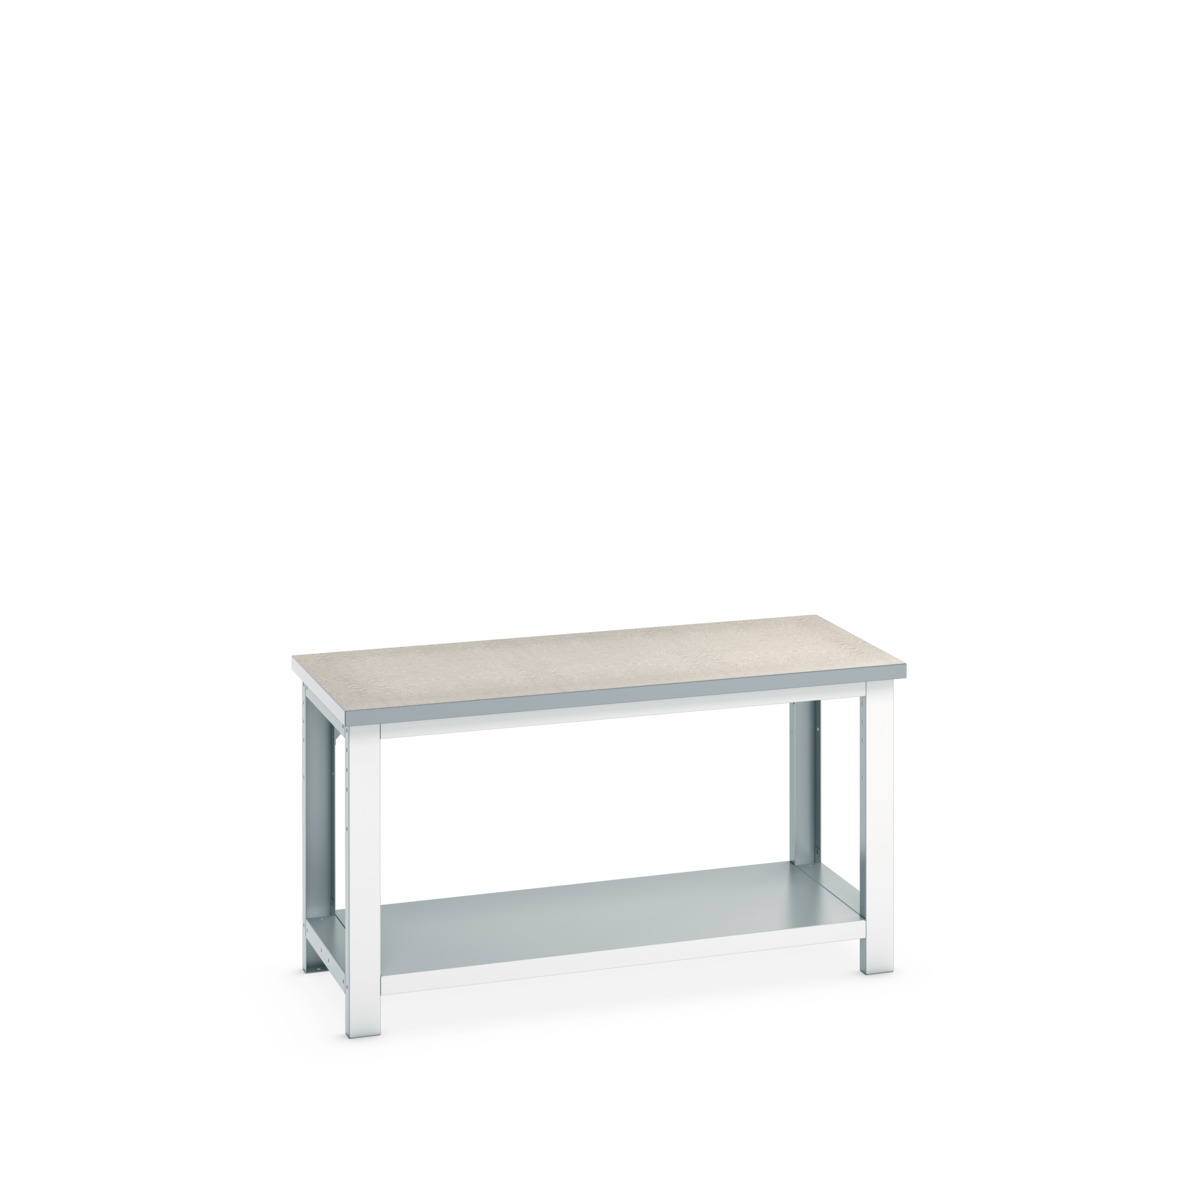 41003504. - cubio framework bench (lino)